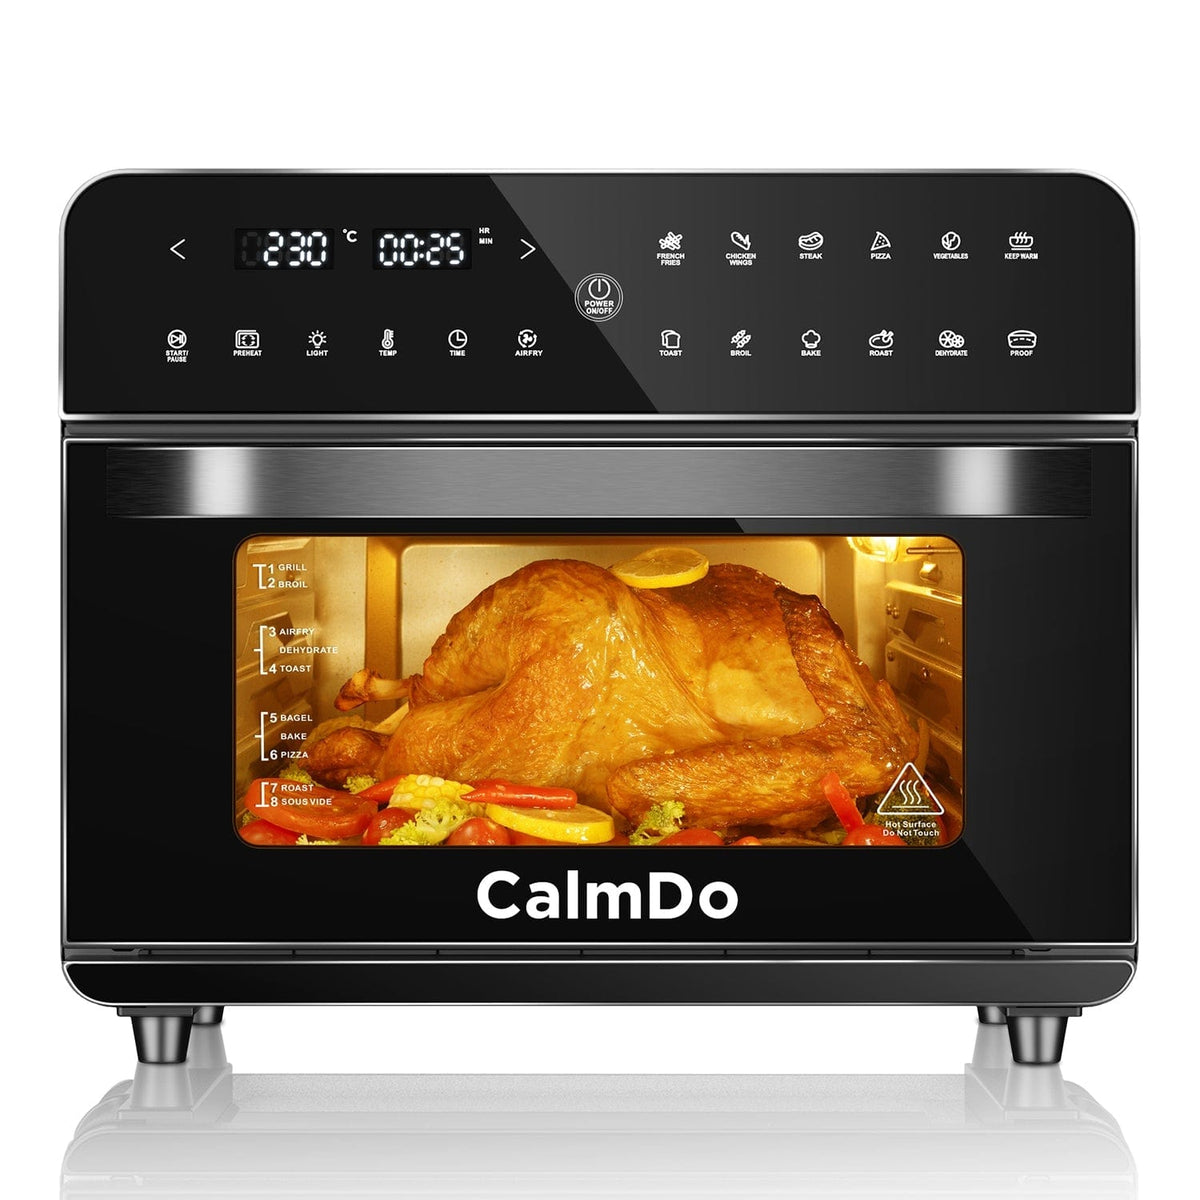 calmdo home appliance CalmDo 26.3 Quart Multi-function Air Fryer Oven